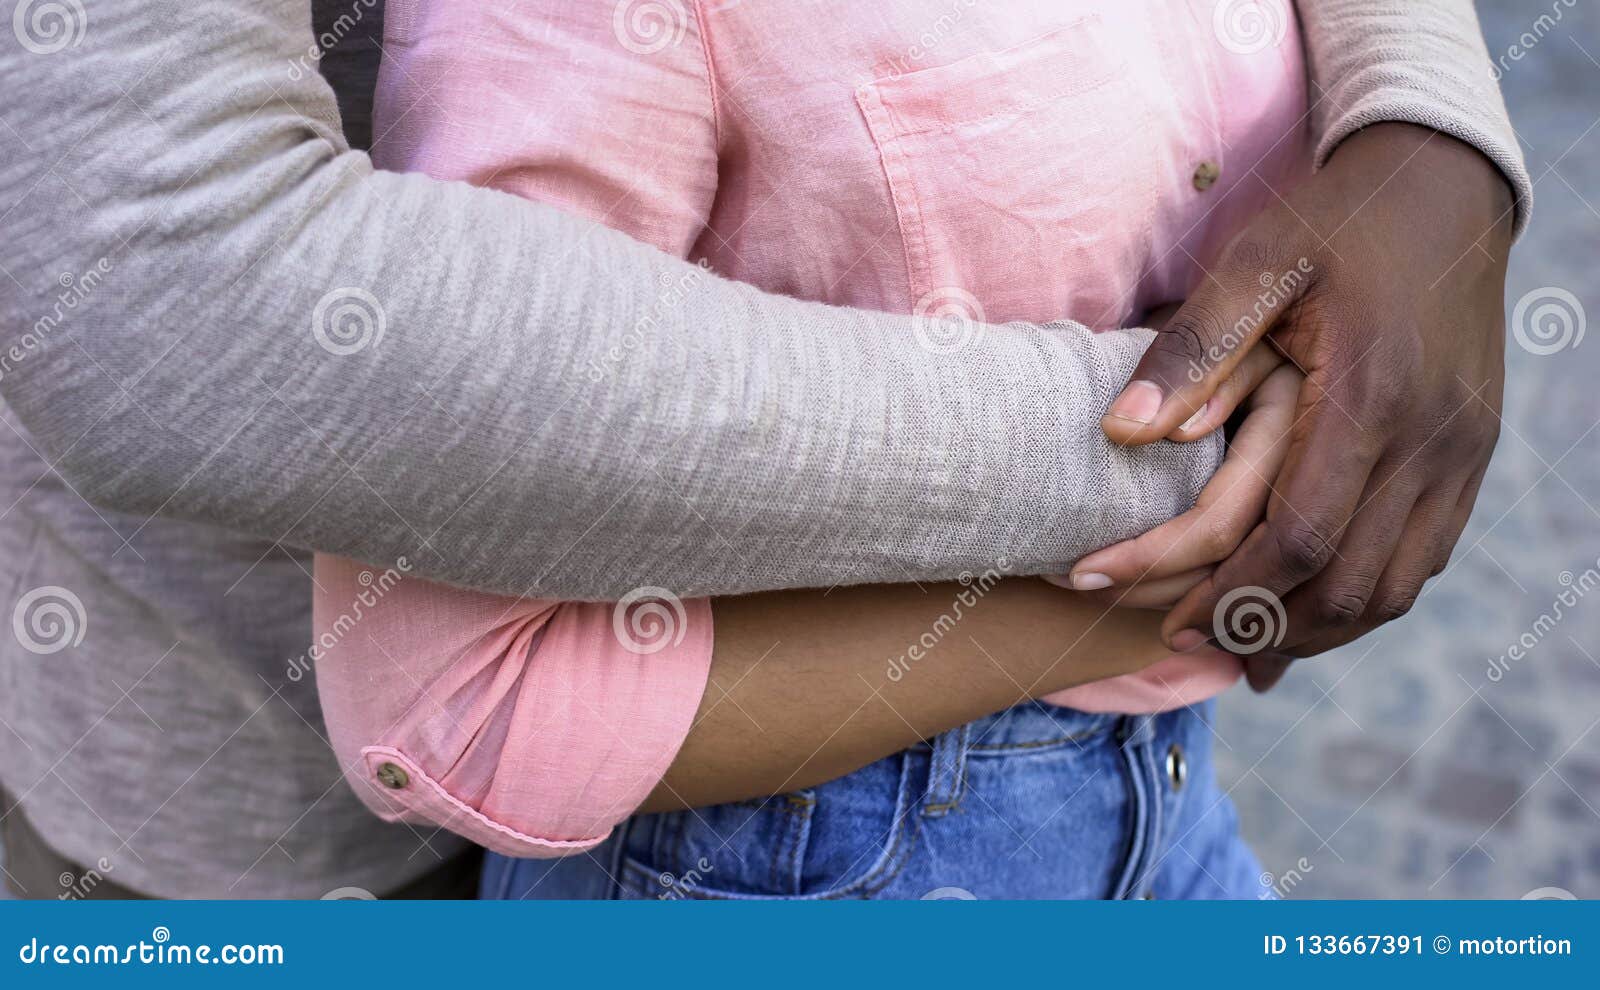 black male hugging girlfriend, romantic date in city, feeling safe in relations